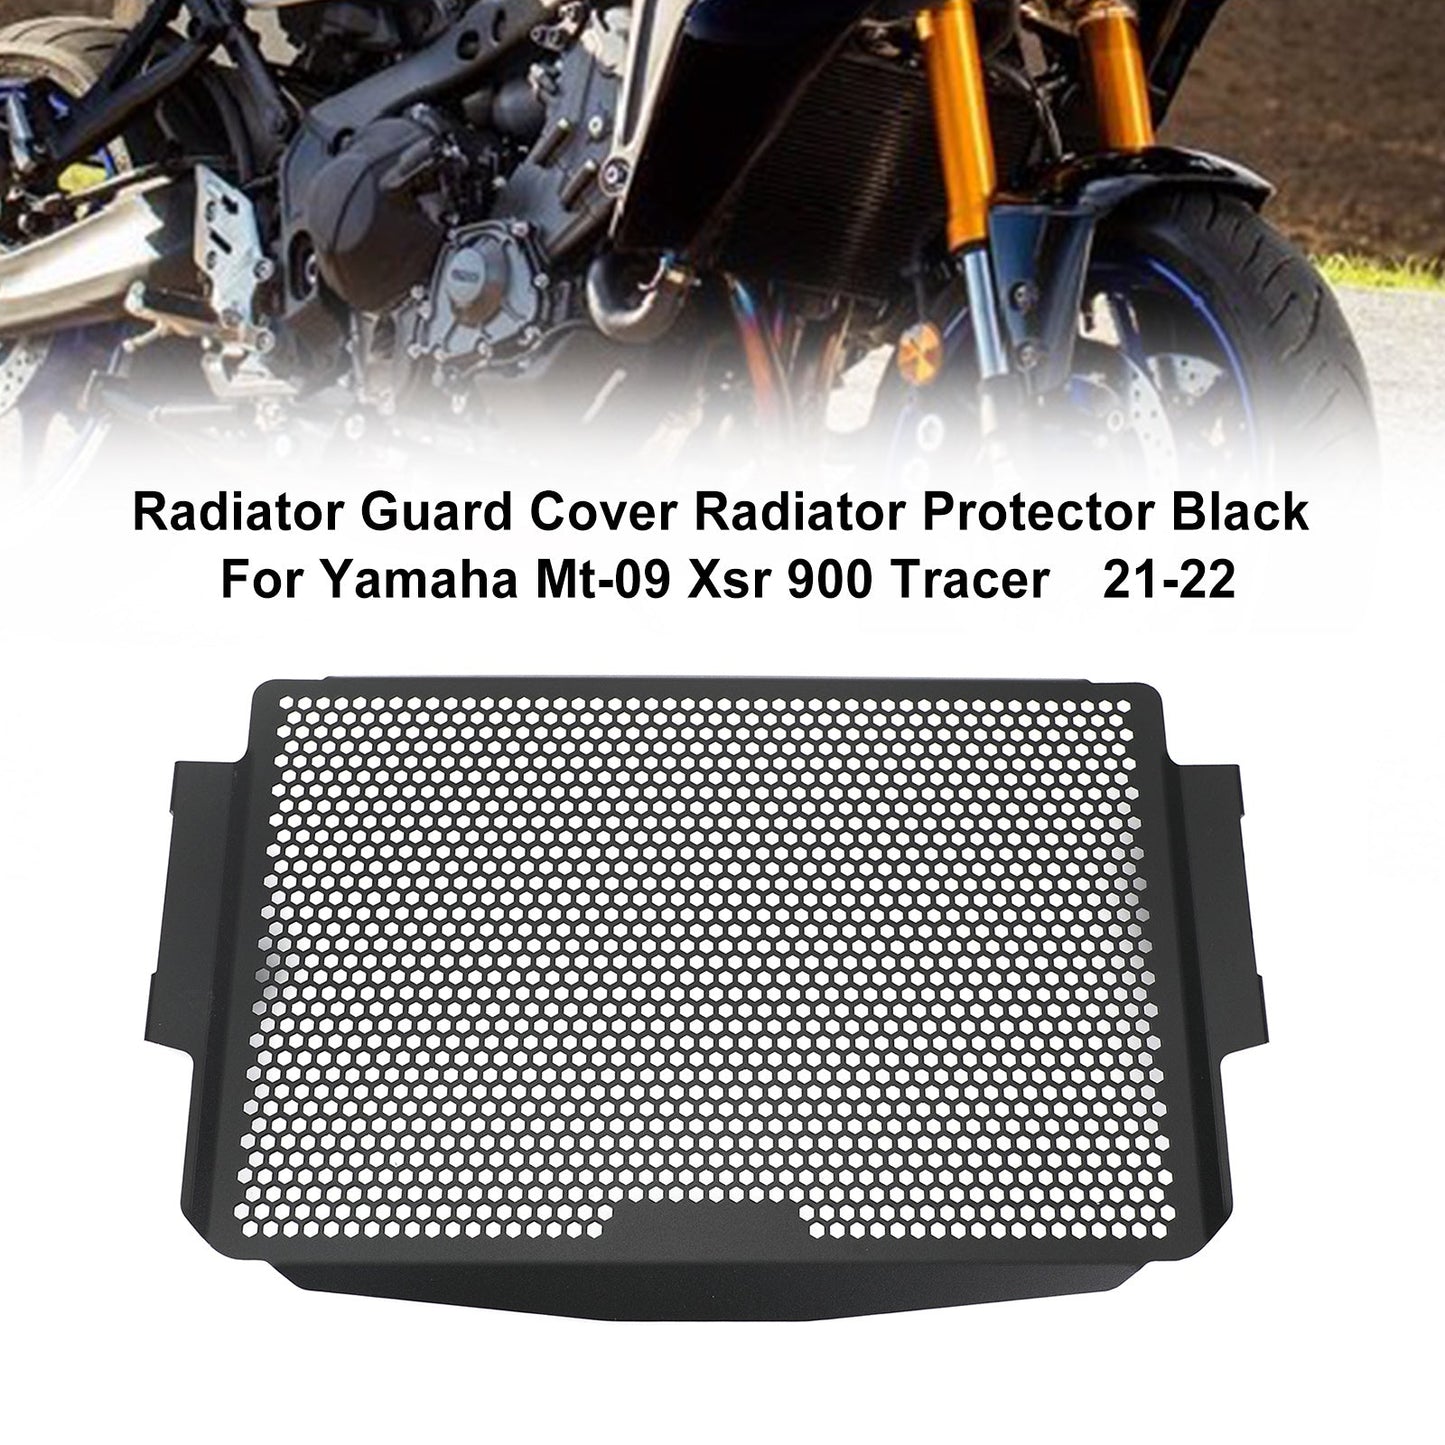 Radiator Guard Protector Radiator Cover Black For Yamaha Mt-09 Xsr 900 21-22